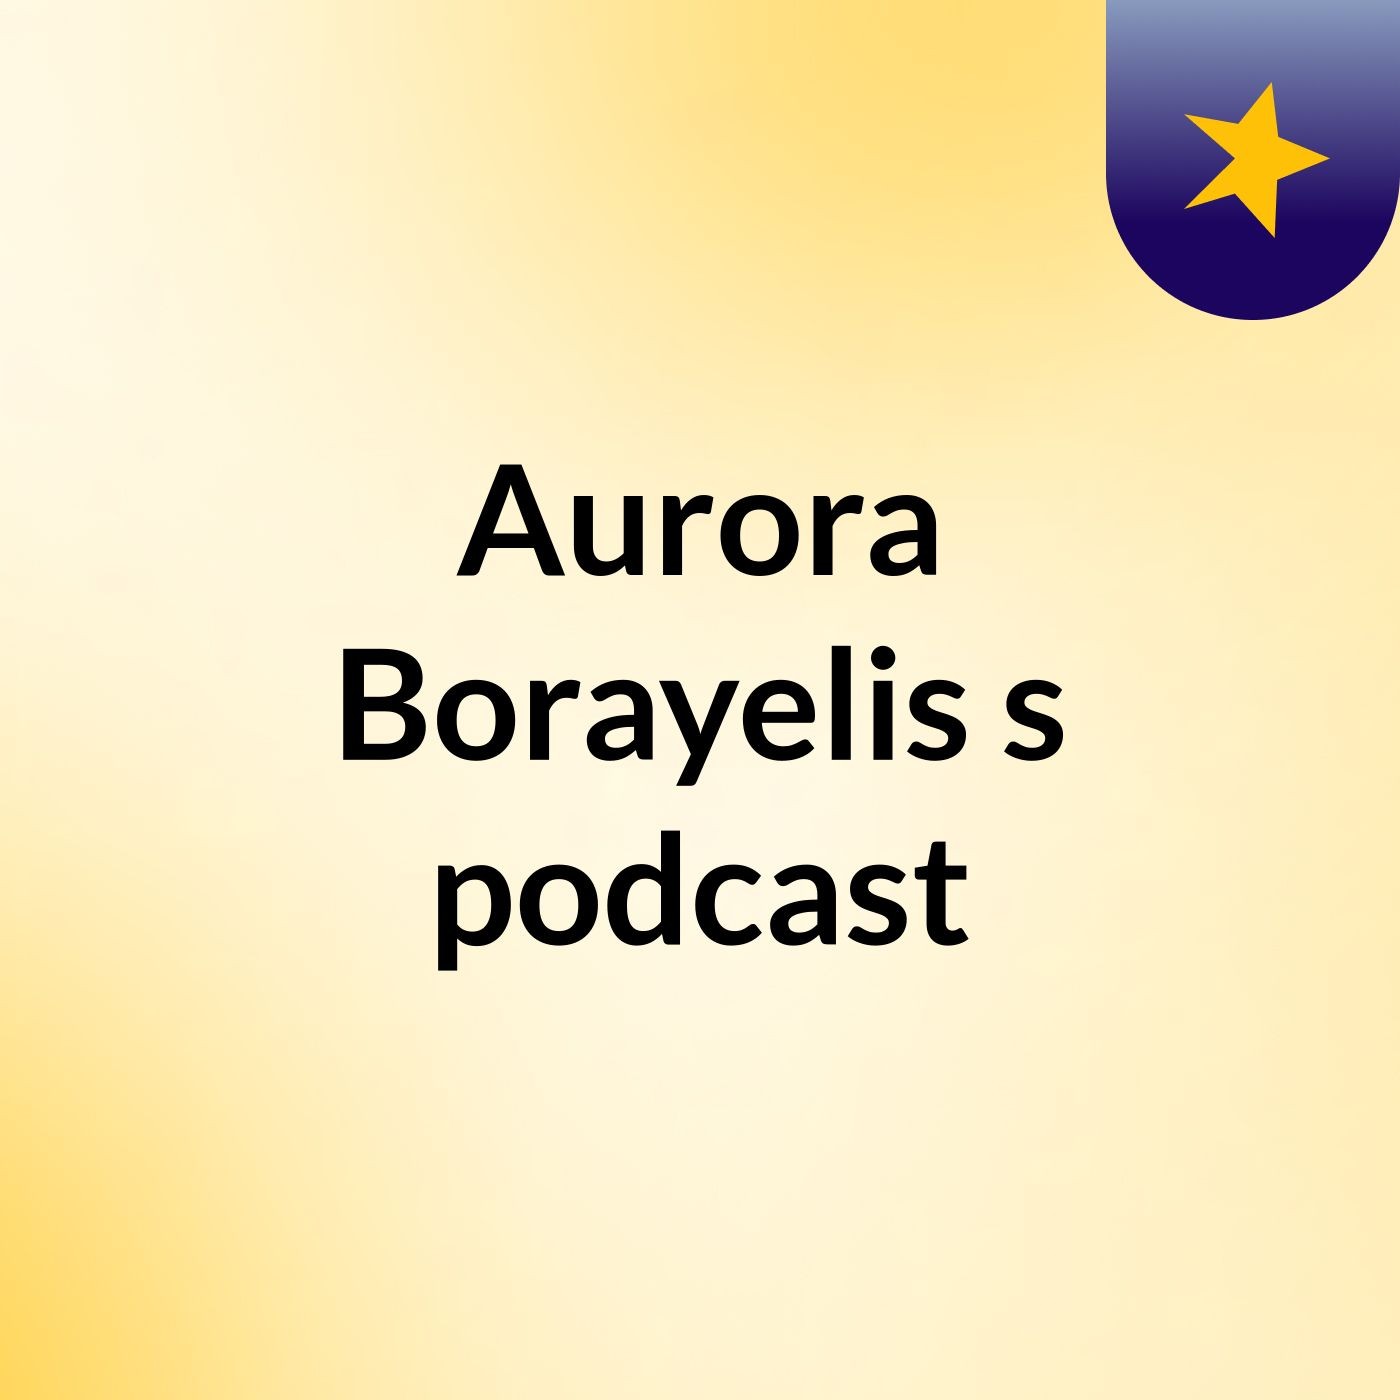 Aurora Borayelis's podcast